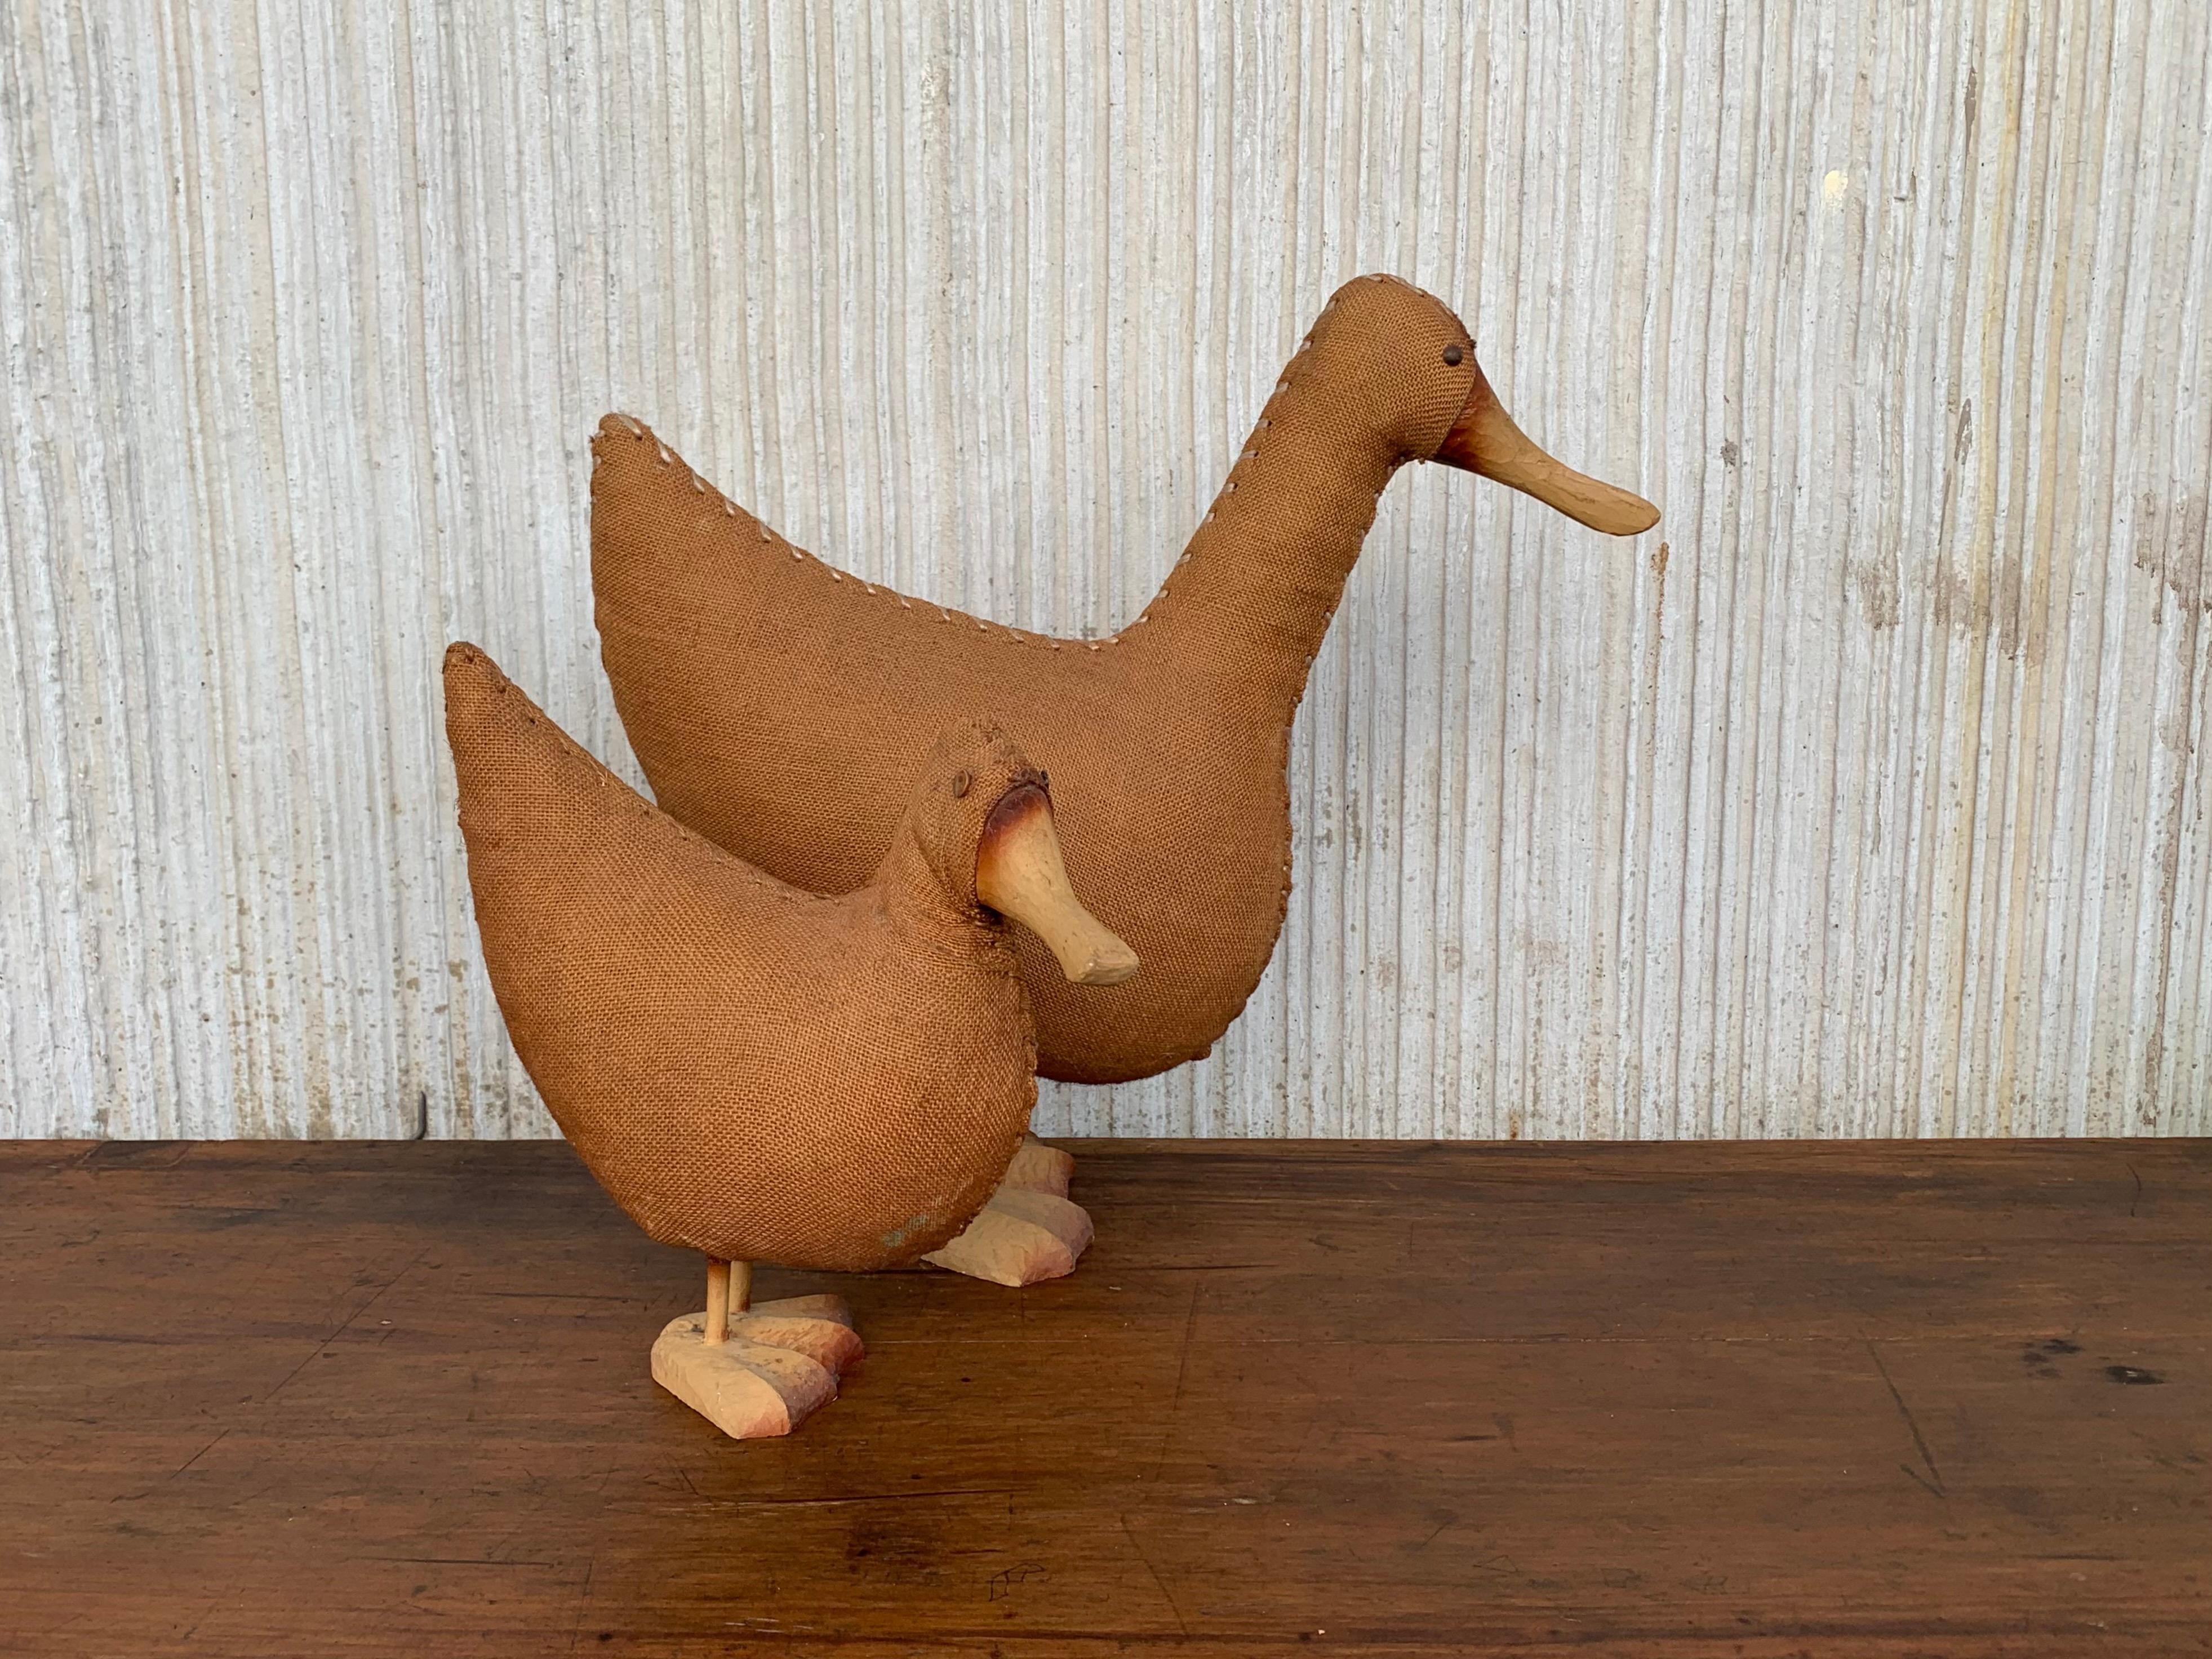 wooden ducks for sale